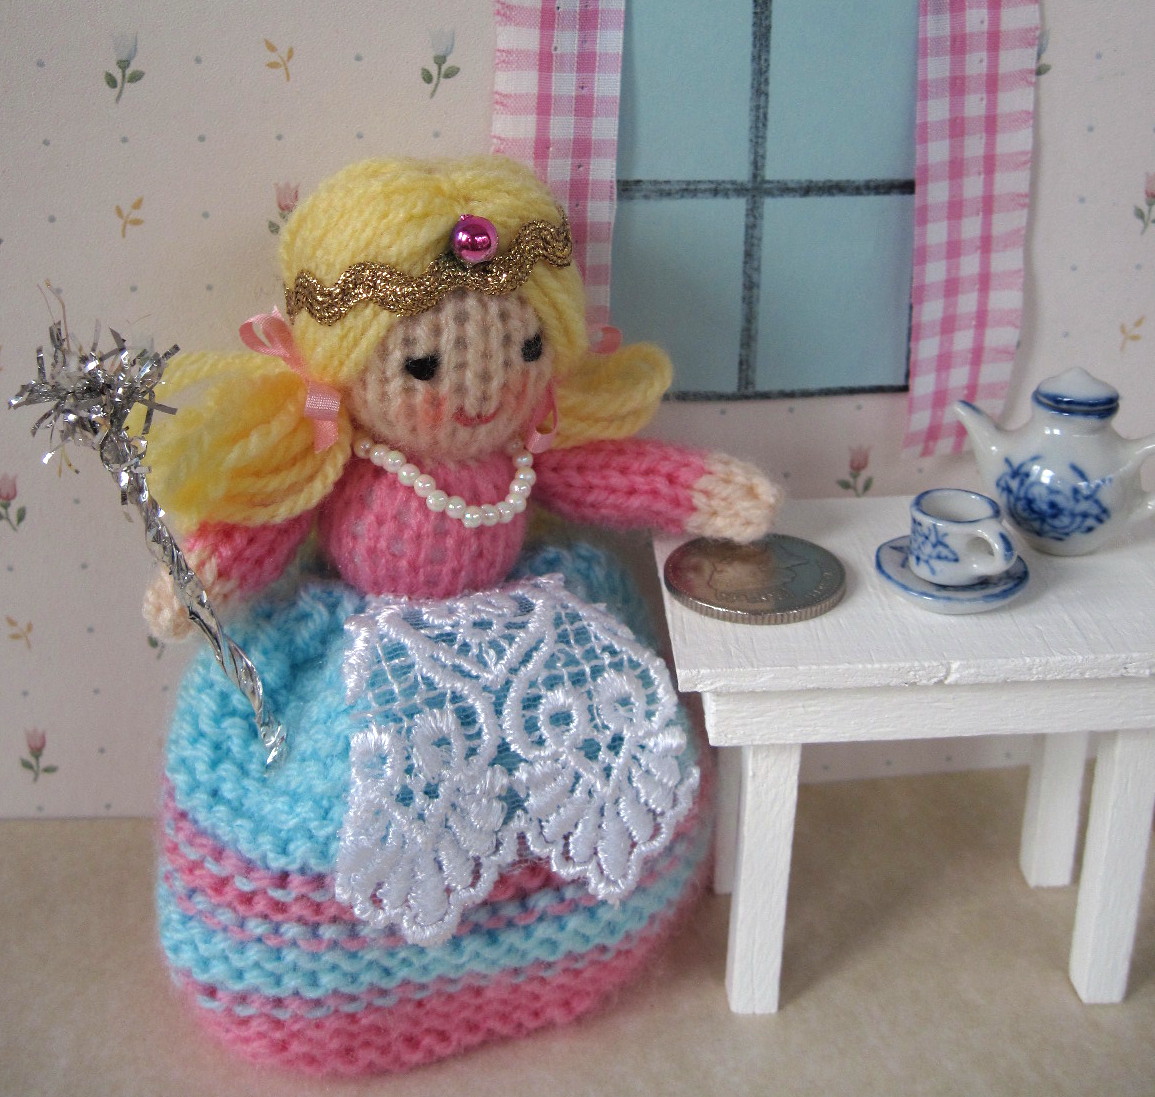 topsy turvy doll knitting pattern free